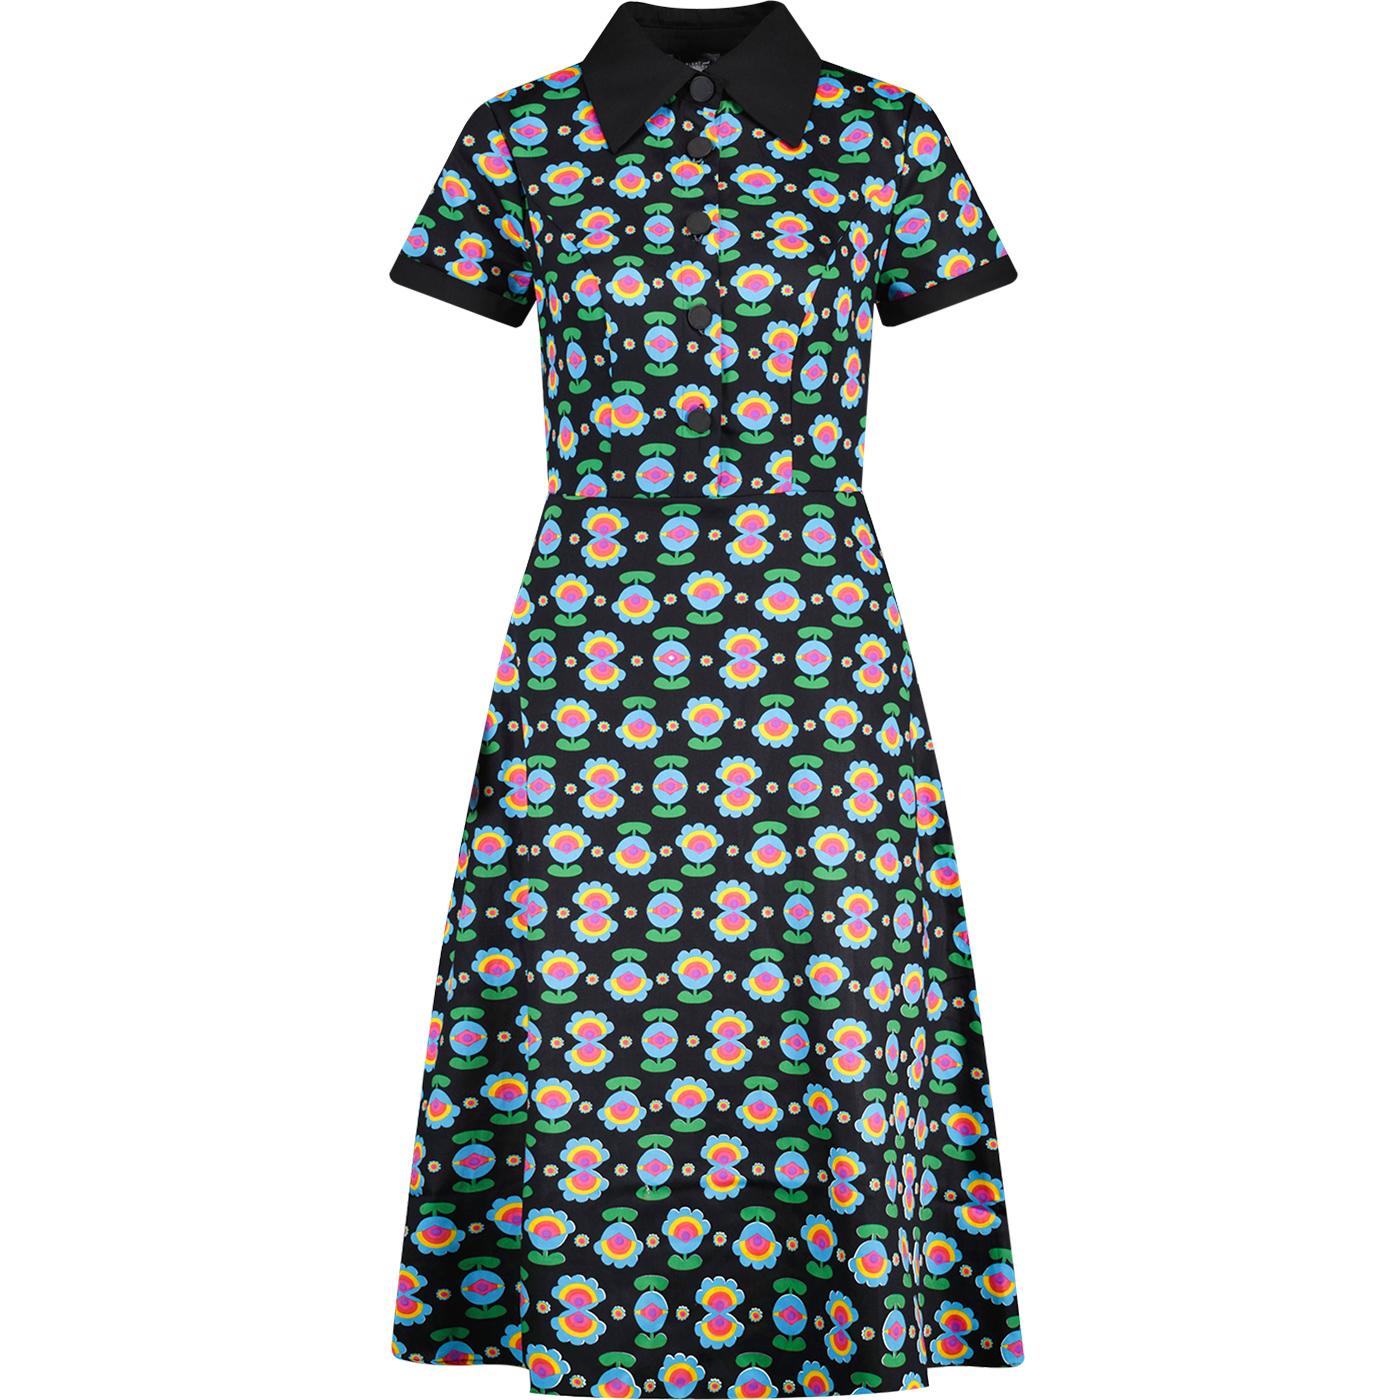 Nia BRIGHT & BEAUTIFUL 60s Eye Spy Floral Dress